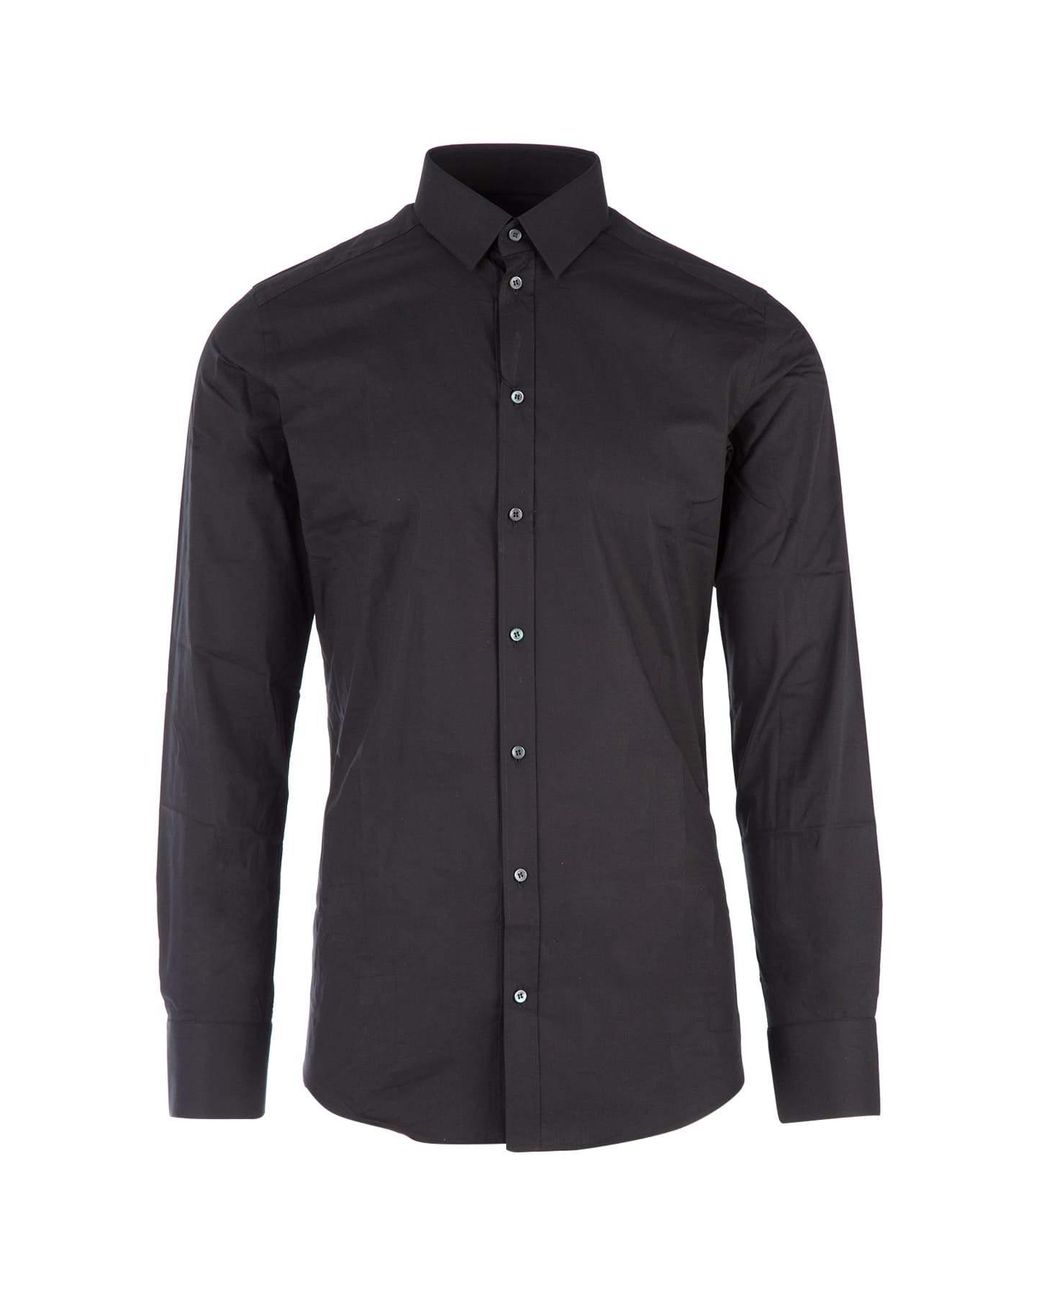 Dolce & Gabbana Cotton Classic Shirt in Black for Men - Lyst